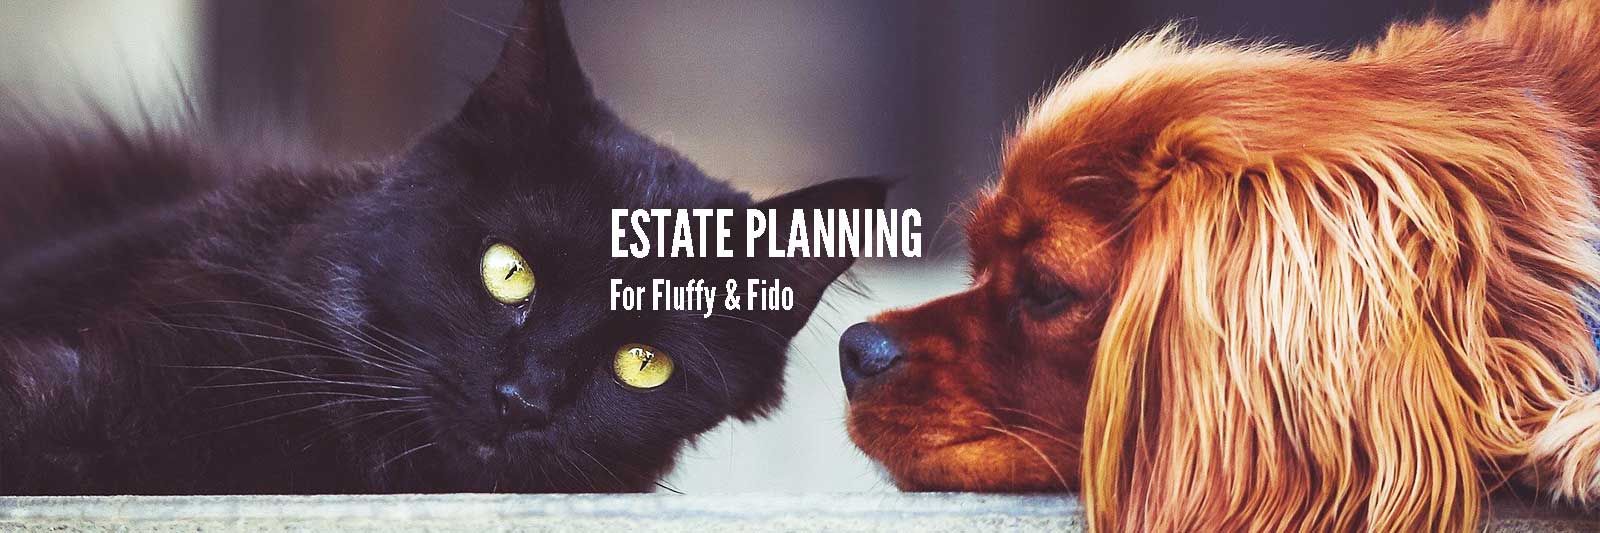 Estate Planning for Fluffy & Fido